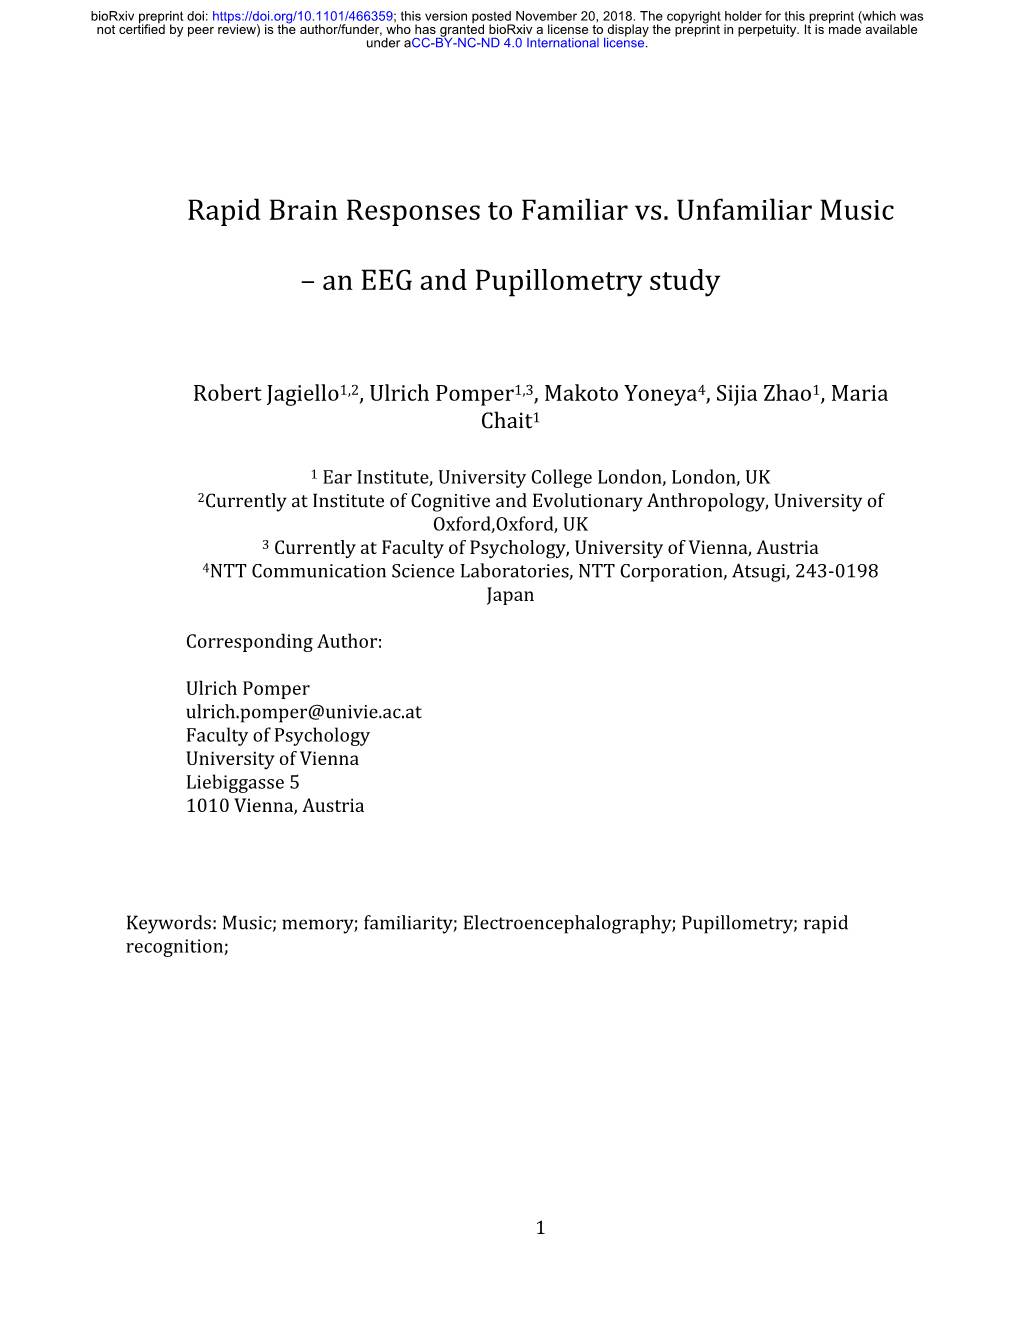 Rapid Brain Responses to Familiar Vs. Unfamiliar Music – an EEG and Pupillometry Study